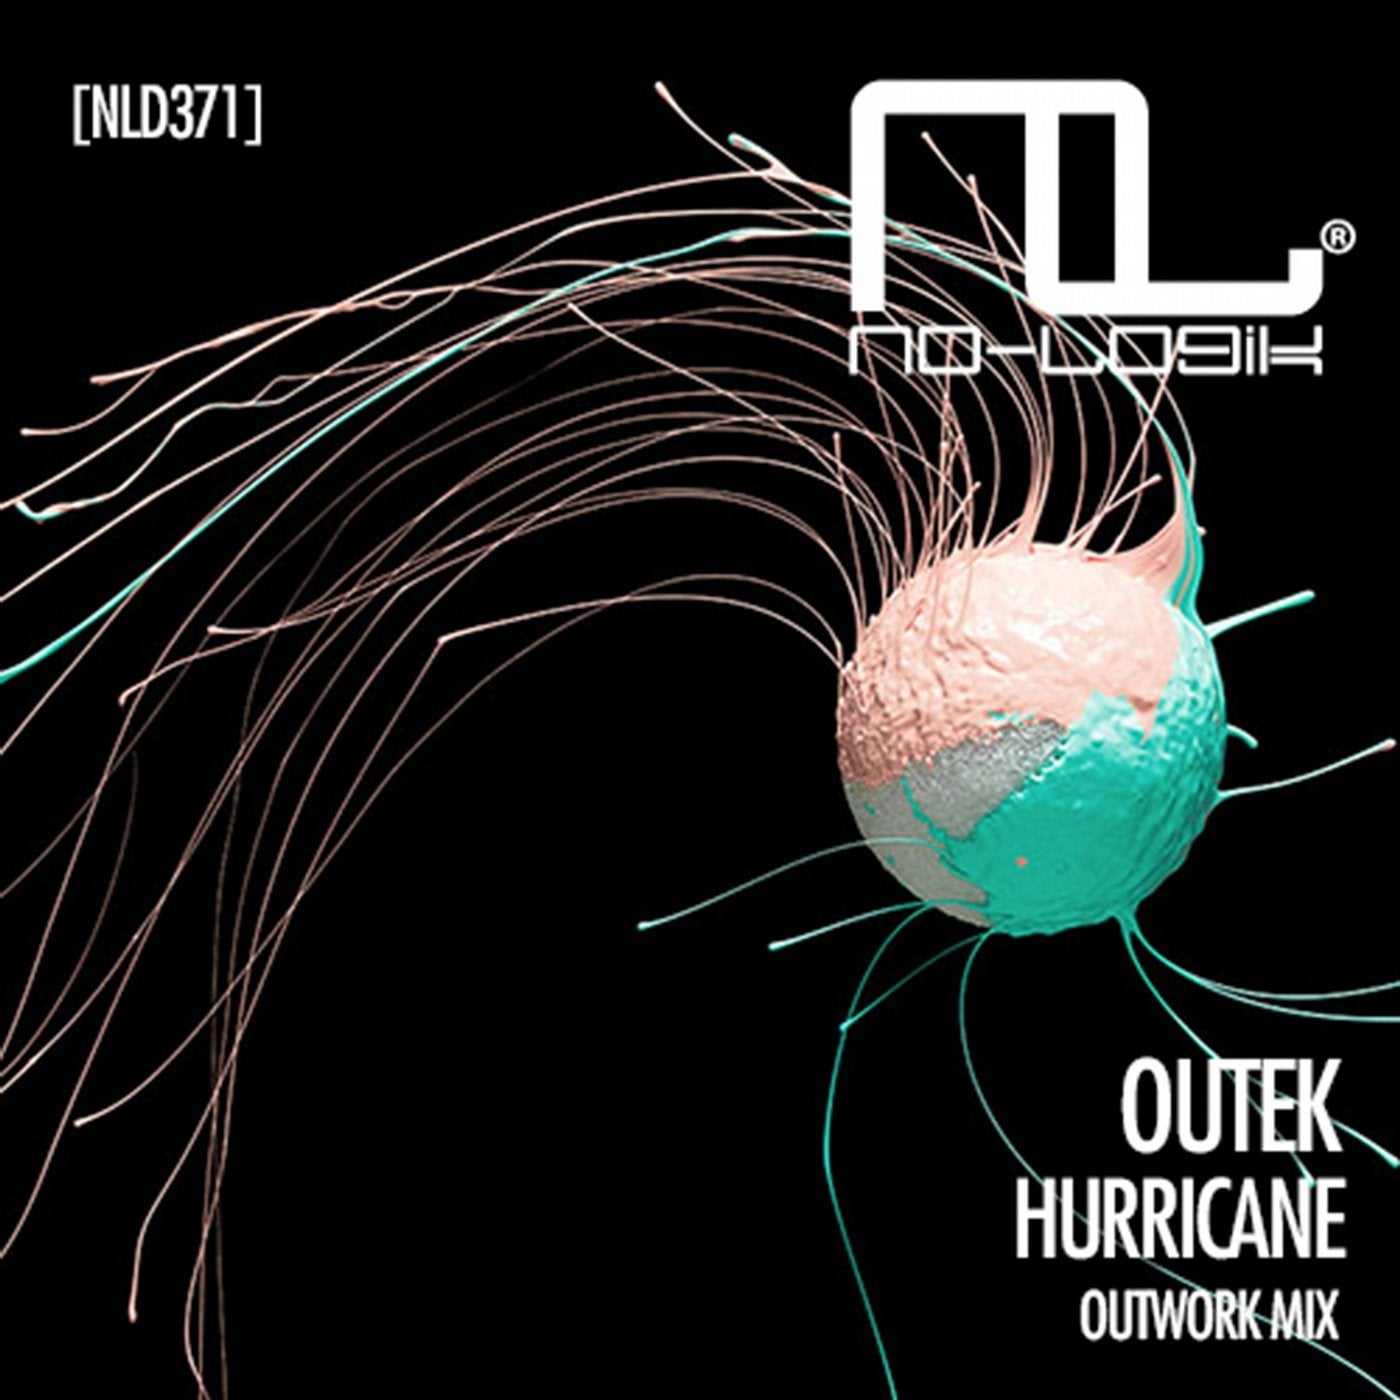 Hurricane (Outwork Mix)